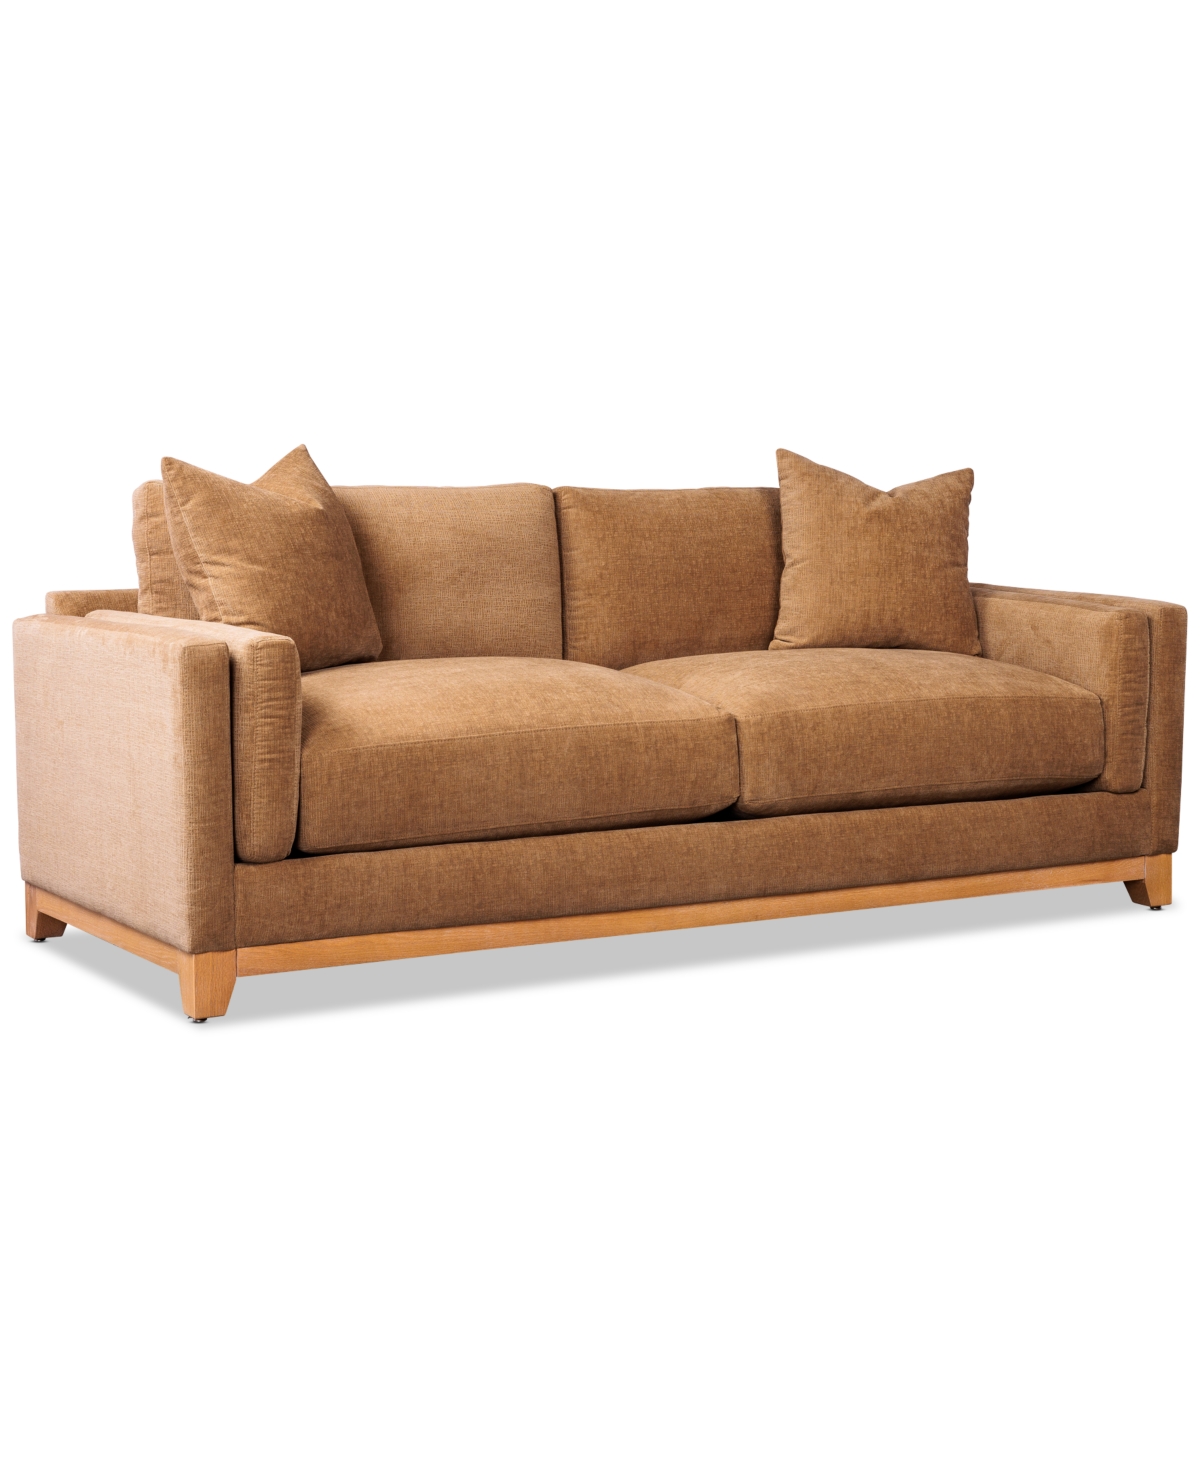 Furniture Estlin Fabric Sofa, Created For Macy's In Café Au Lait